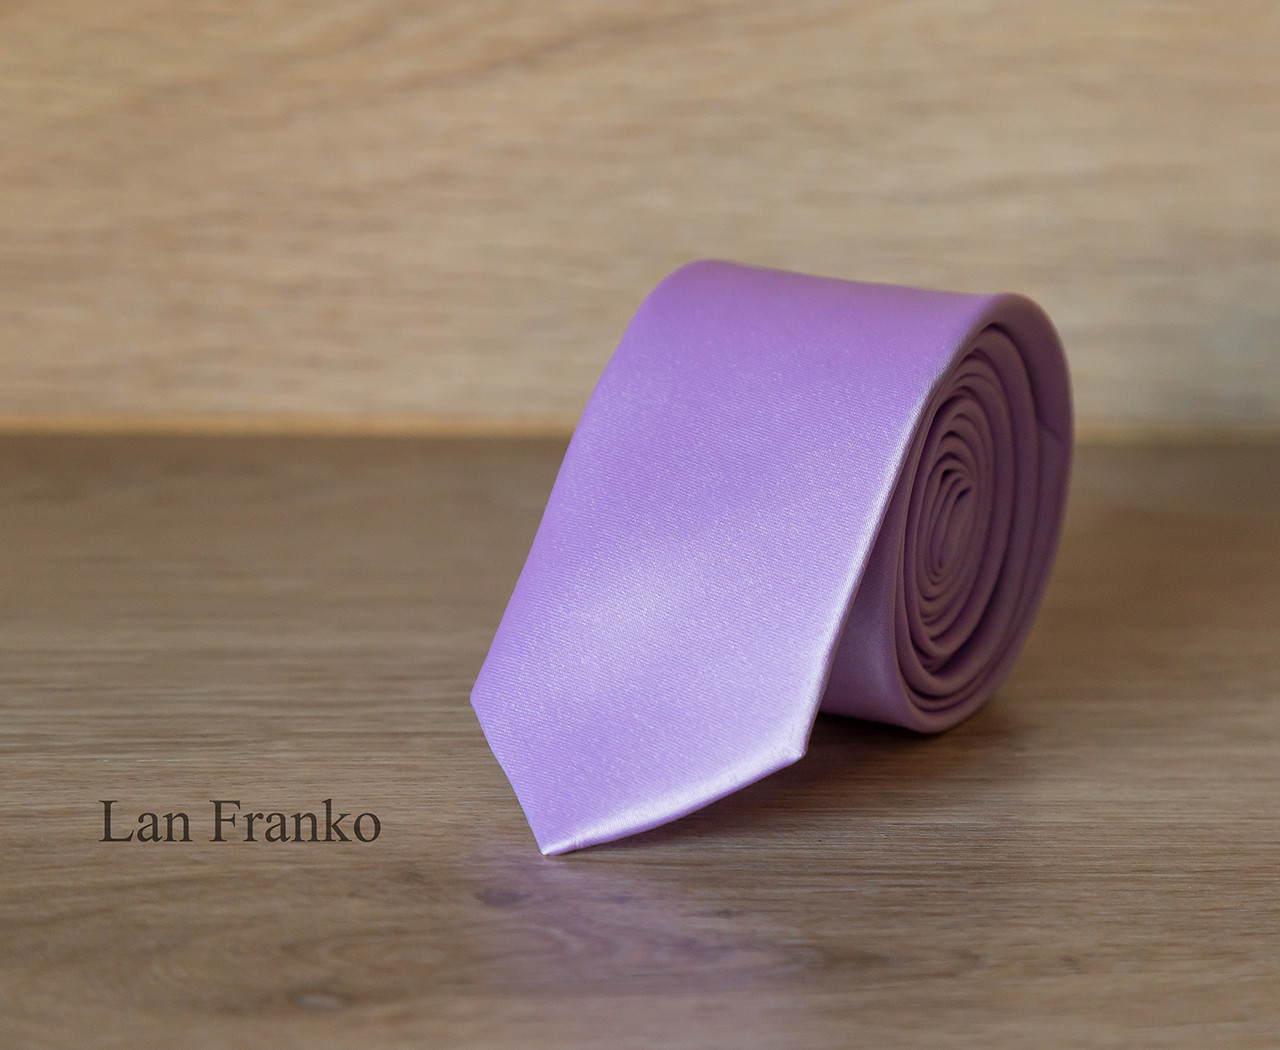 темно-синий галстук мужской однотонный Lan Franko, галстук узкий из сатина